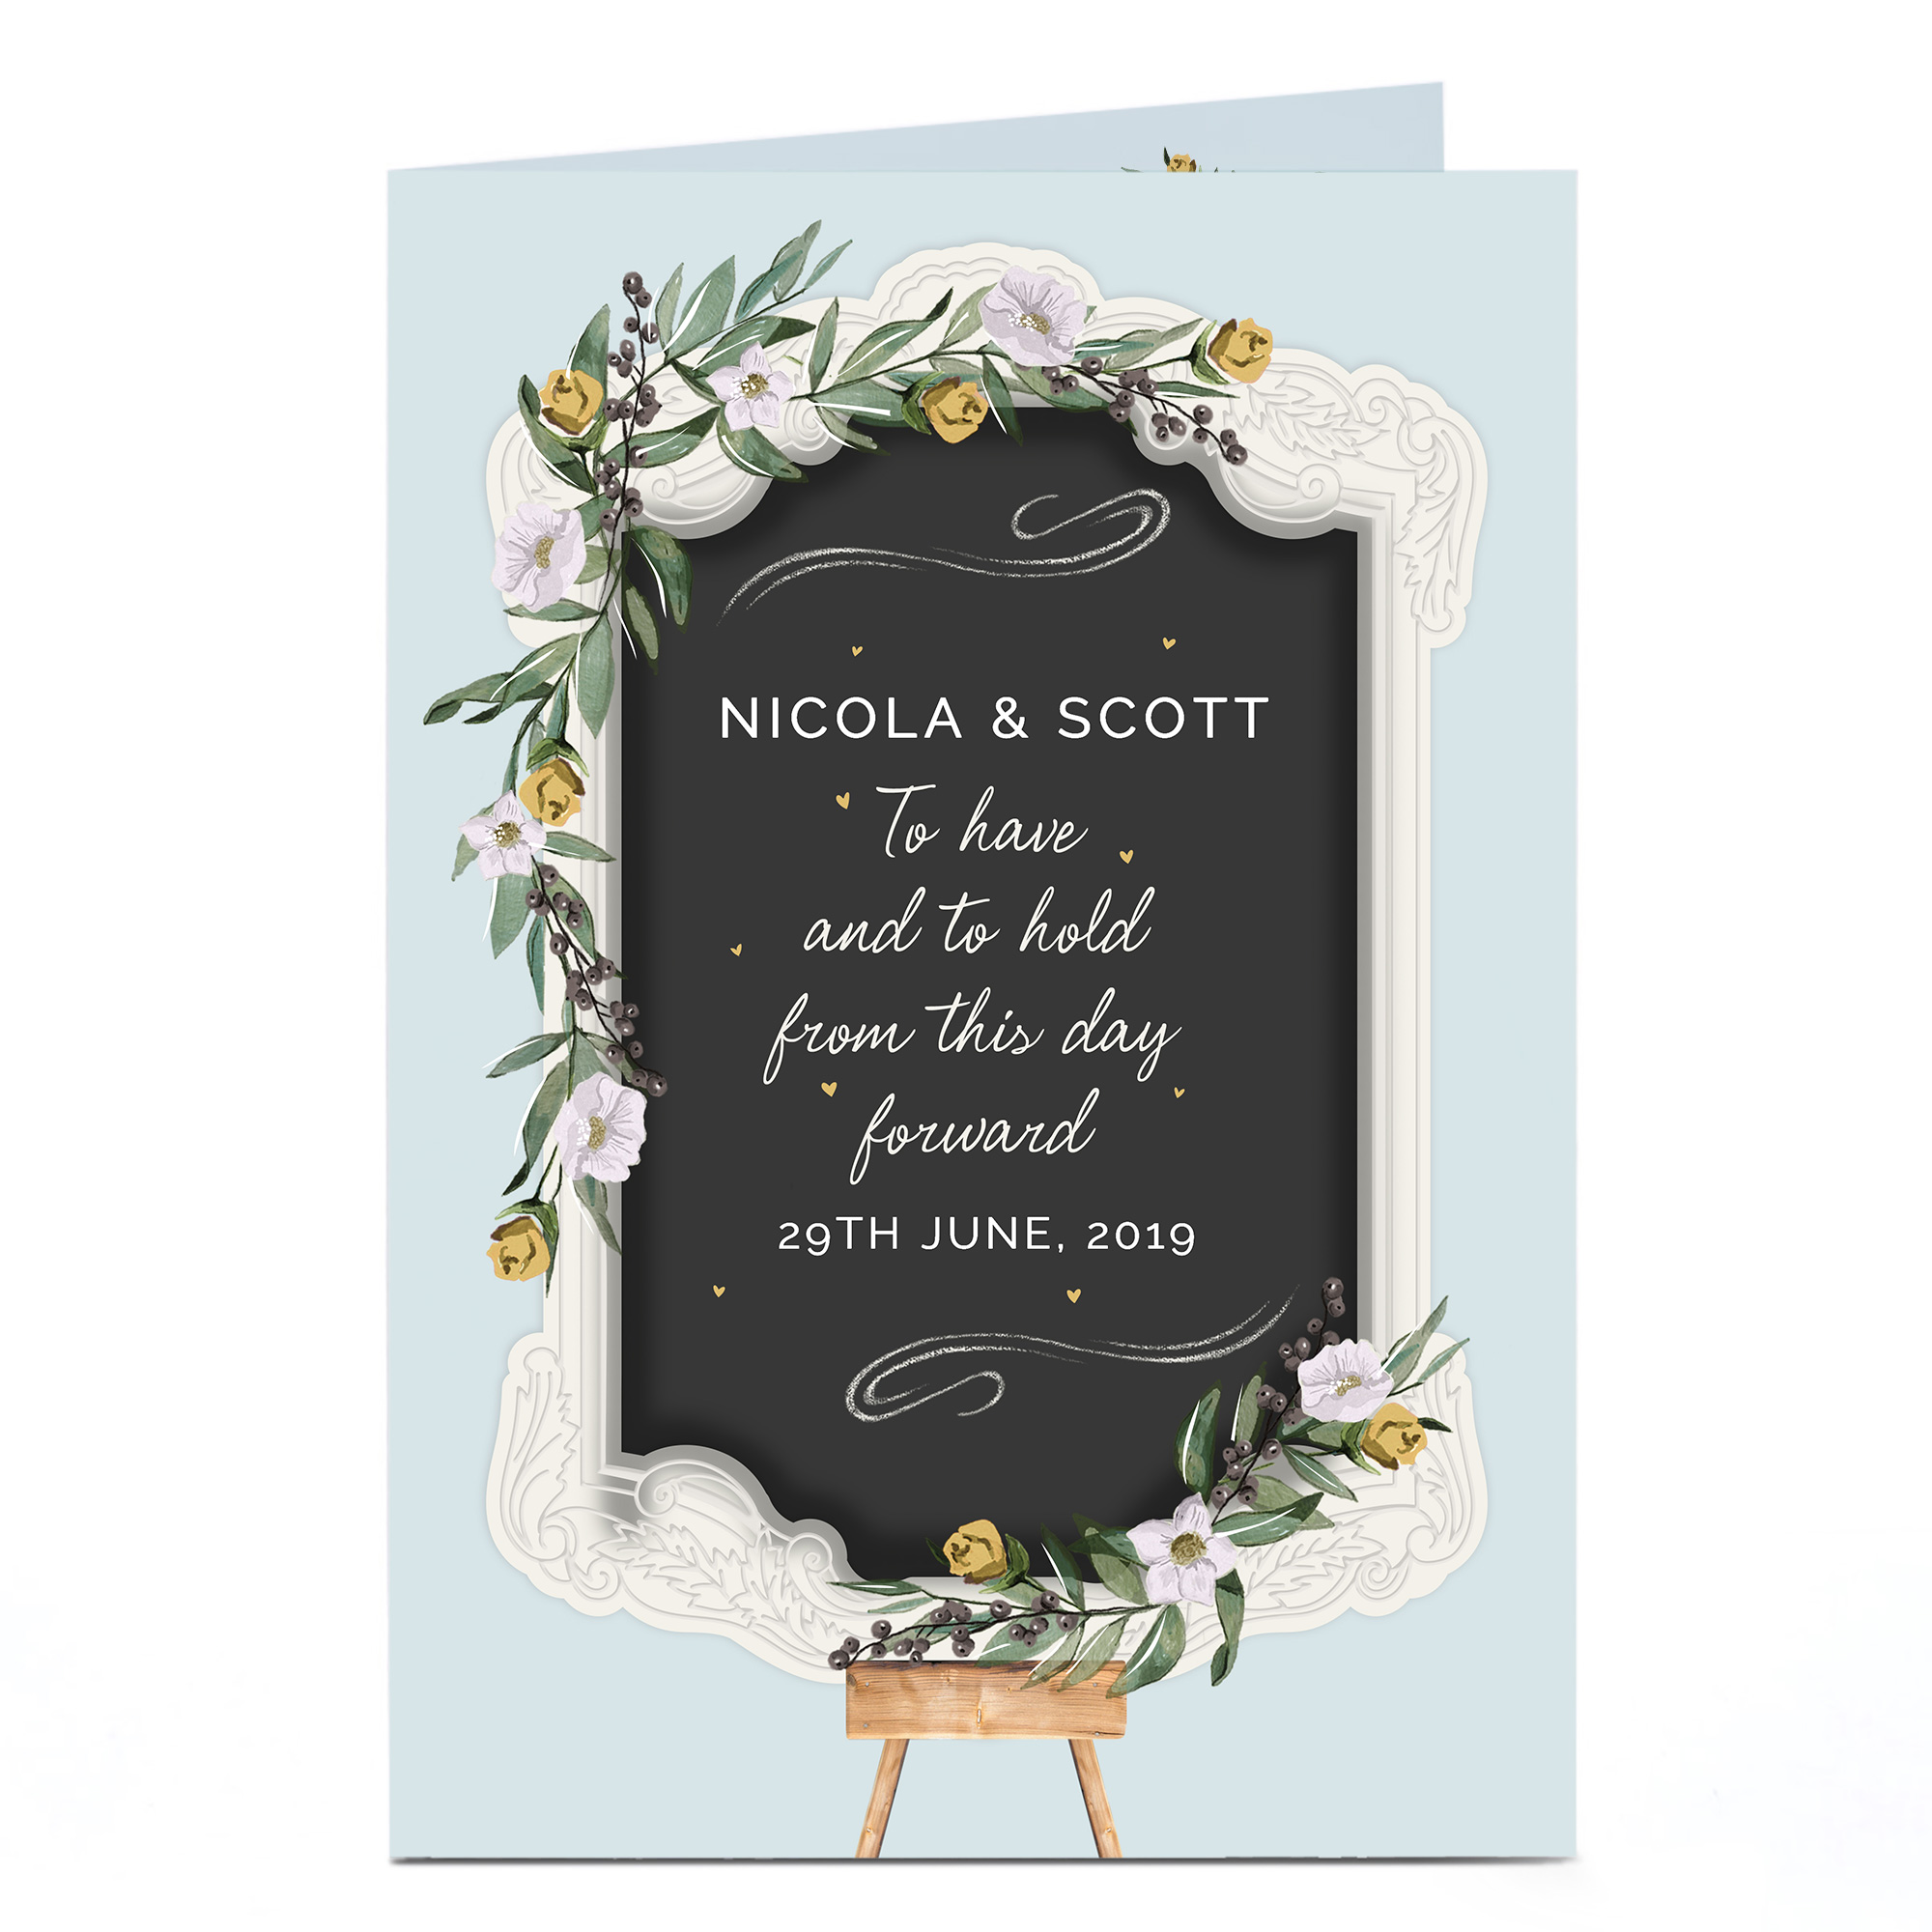 Personalised Wedding Card - Floral Chalkboard